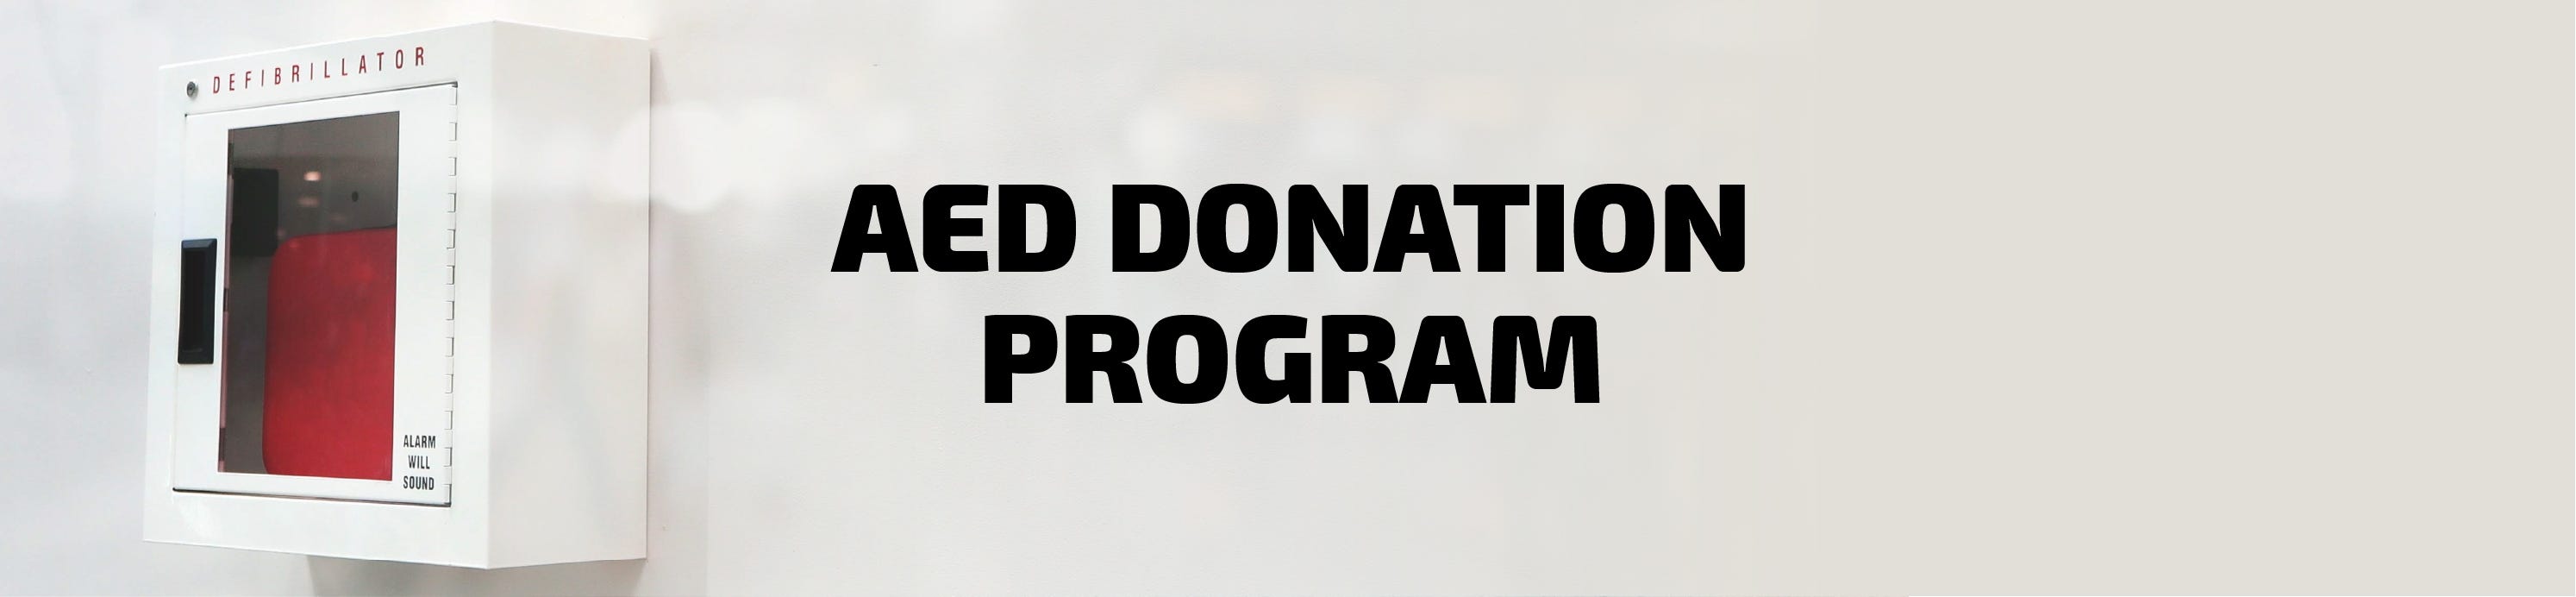 AED Donation Program